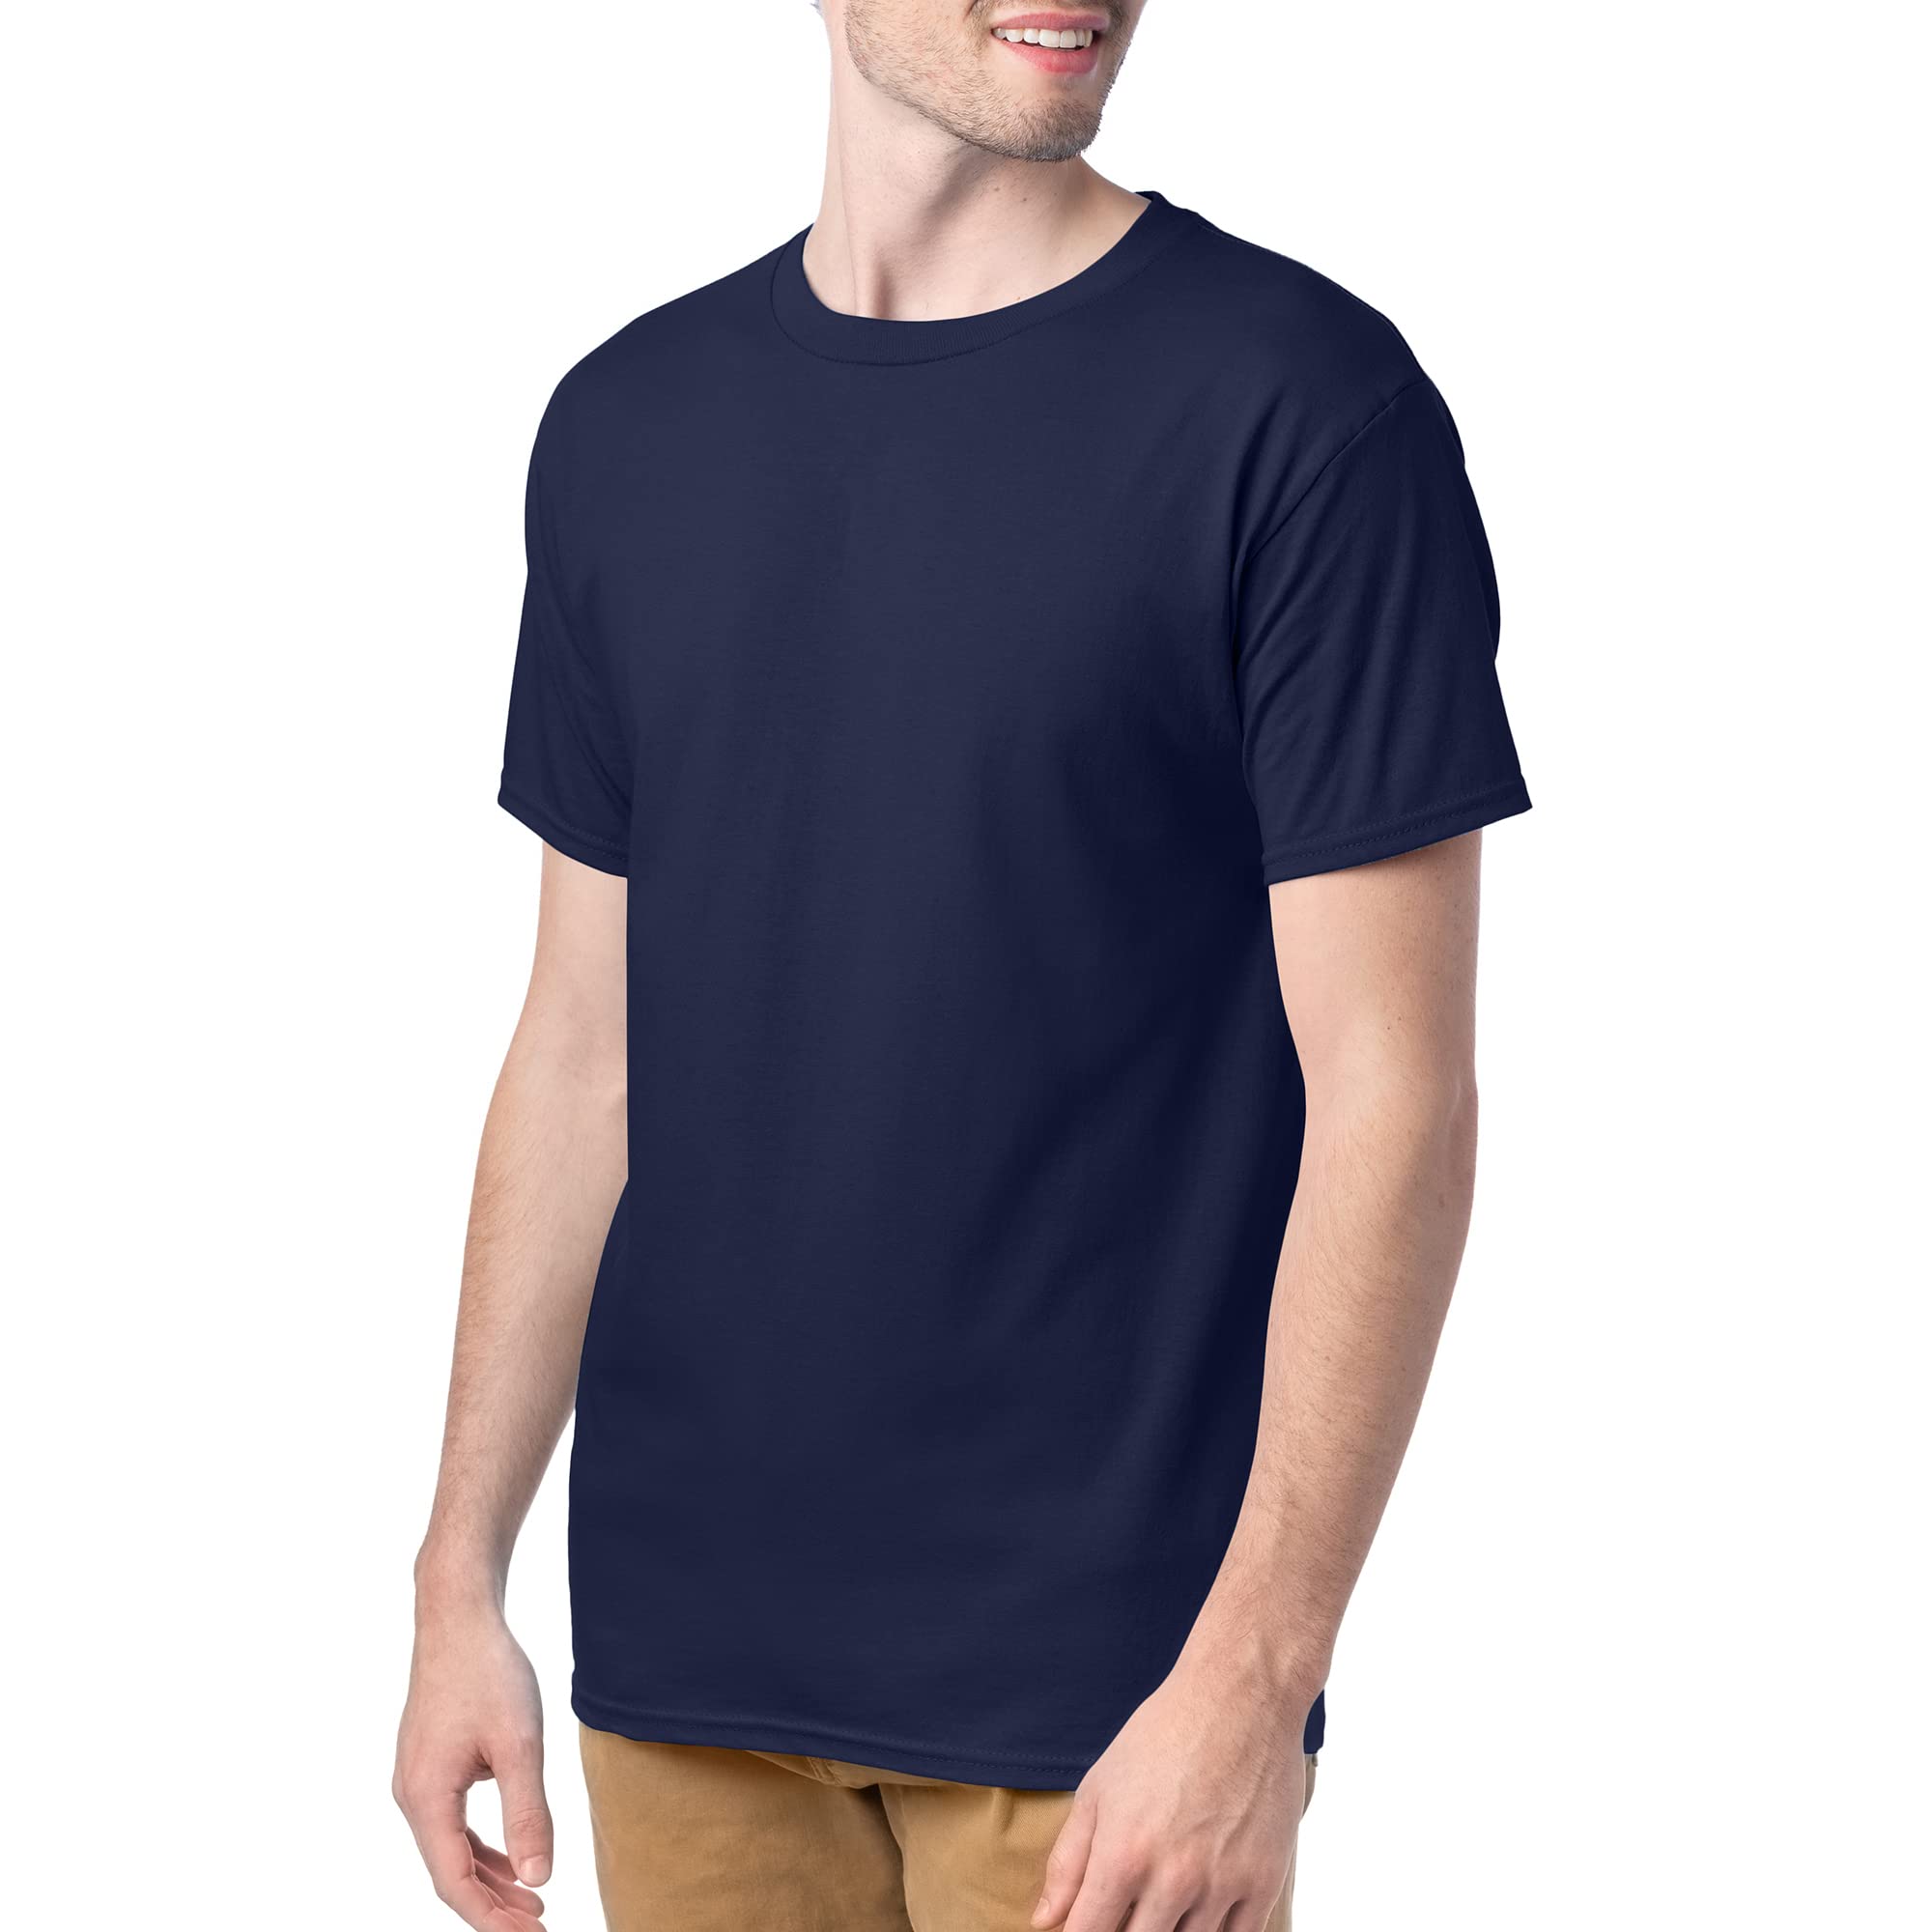 Hanes Men's T-Shirt Pack, Essential-T Cotton T-Shirt 4-Pack, Hanes-Our Best Short Sleeve Tee, Super Soft Cotton, Multipack